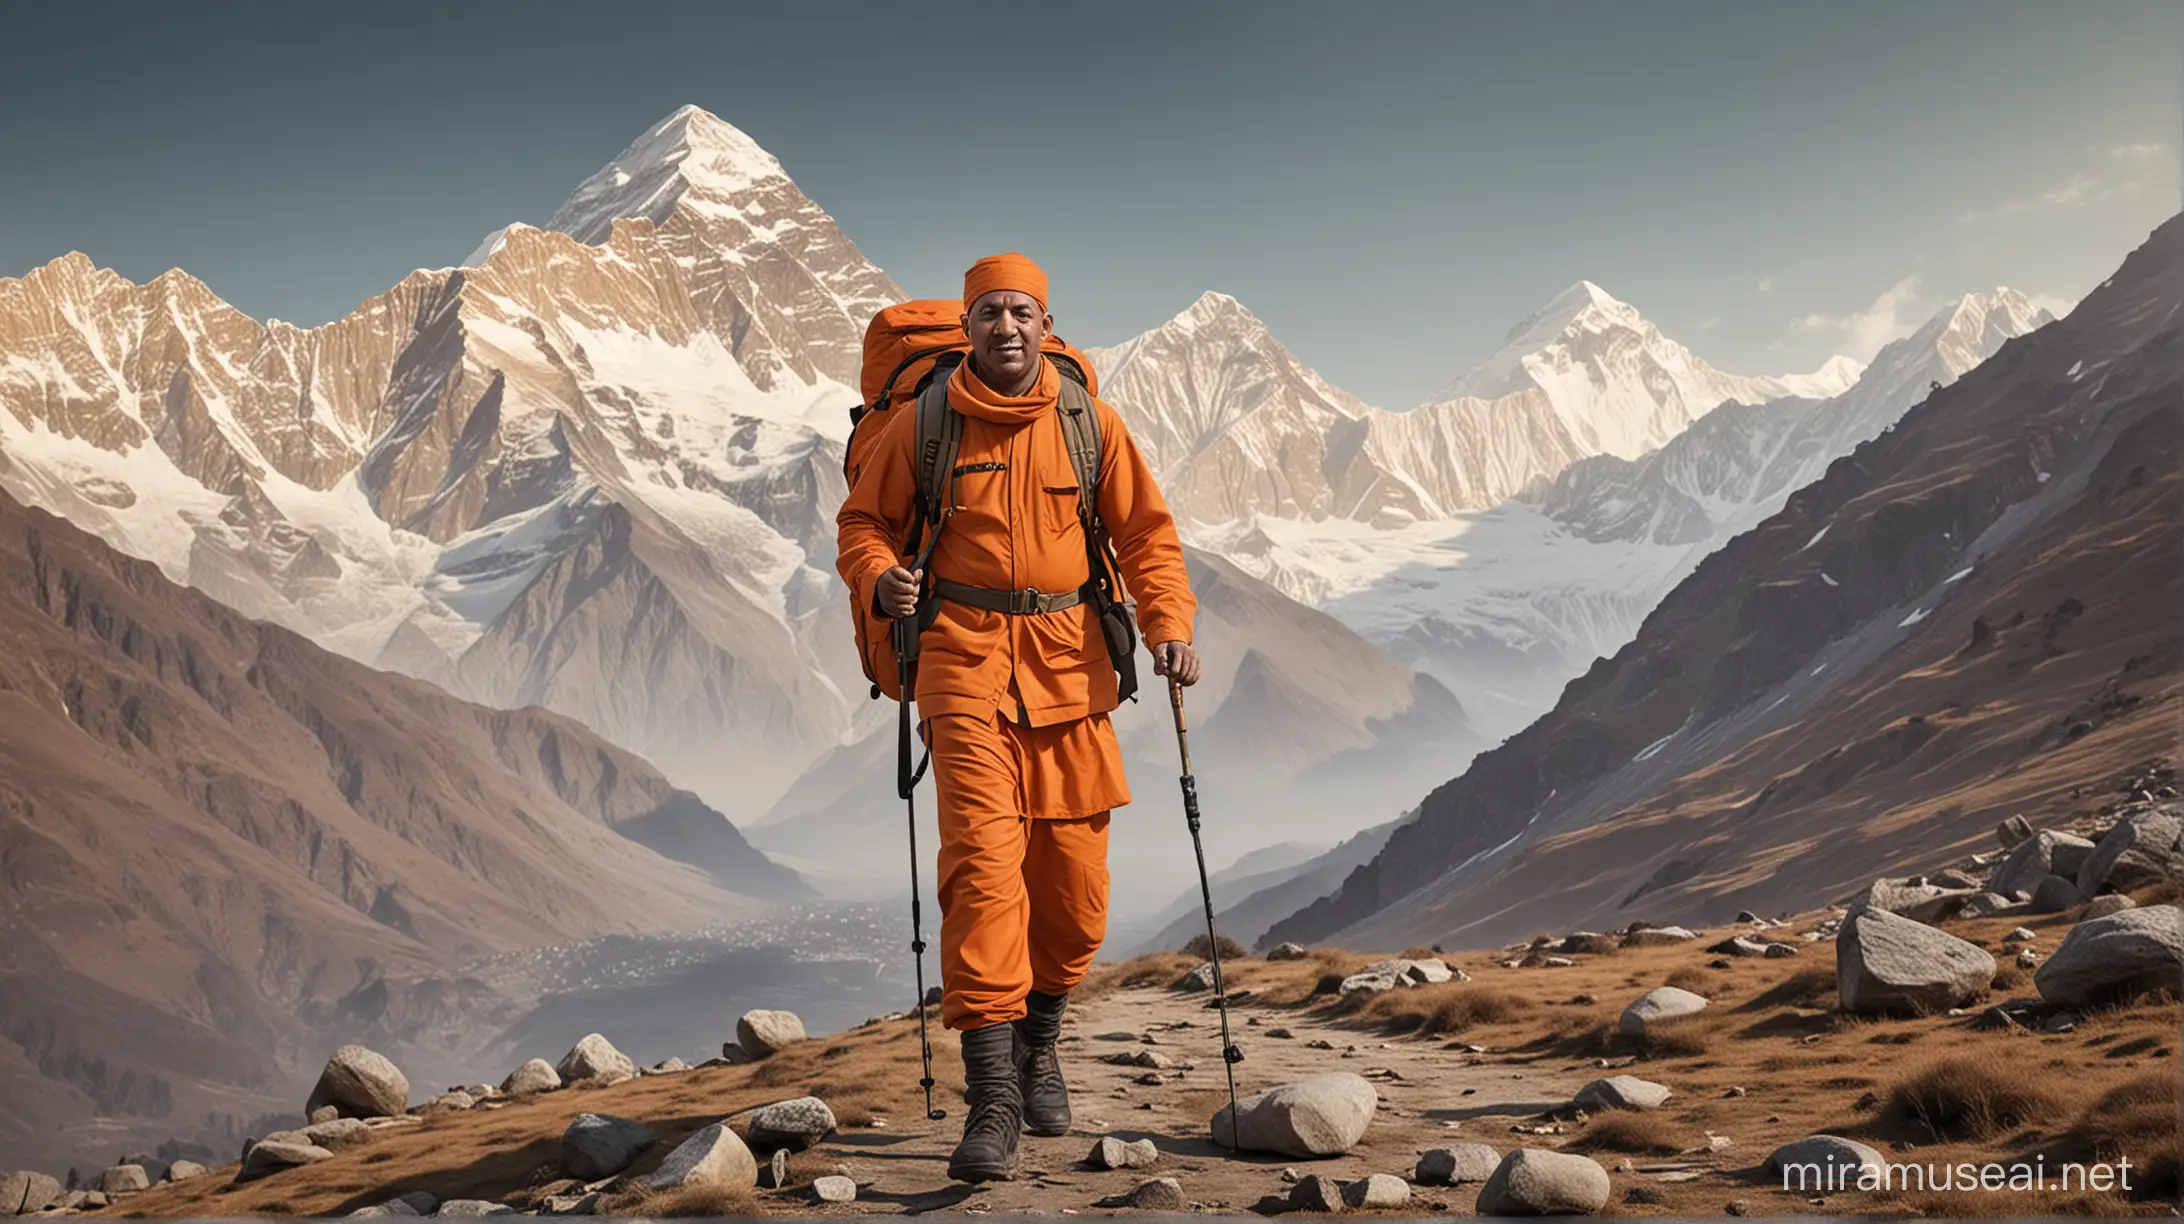 Uttar Pradesh Chief Minister Yogi Adityanath Trekking Adventure in the Majestic Himalayas